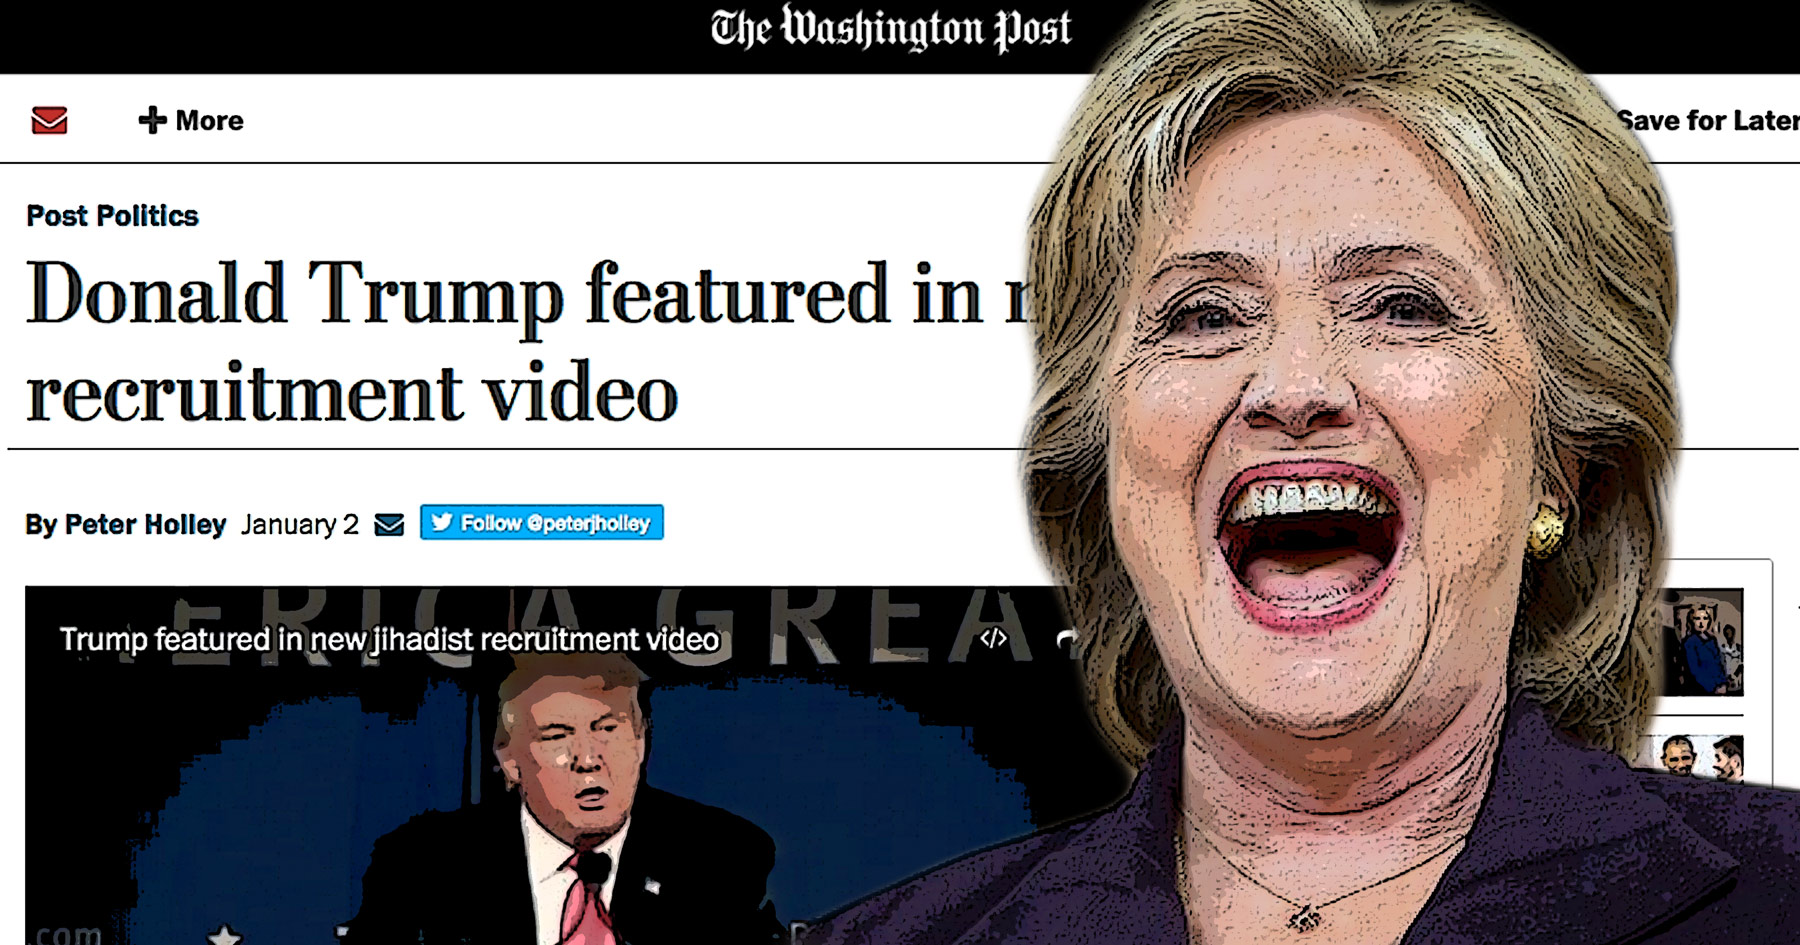 Hillary Clinton, Donald Trump, Washington Post, Bias, video, Common Sense, illustration